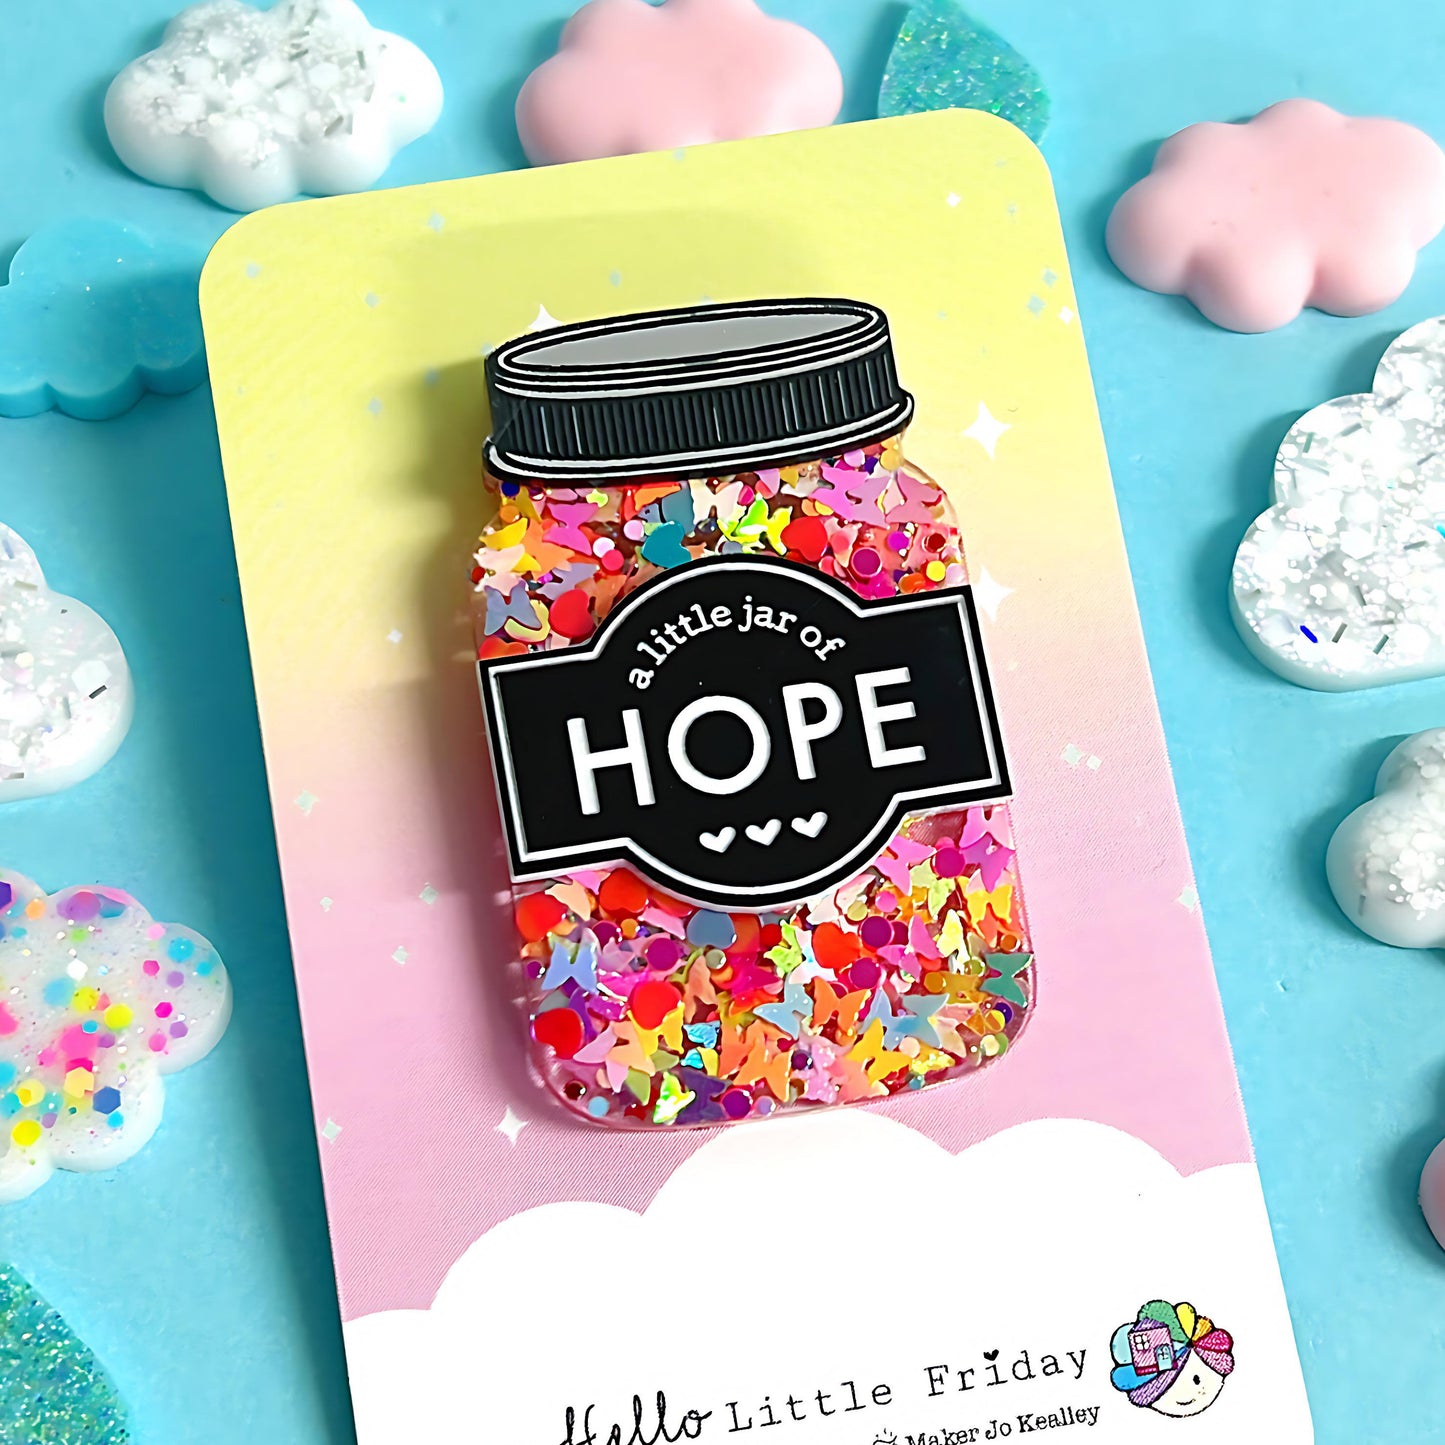 A LITTLE JAR OF : HOPE : Handmade Resin & Acrylic BROOCH